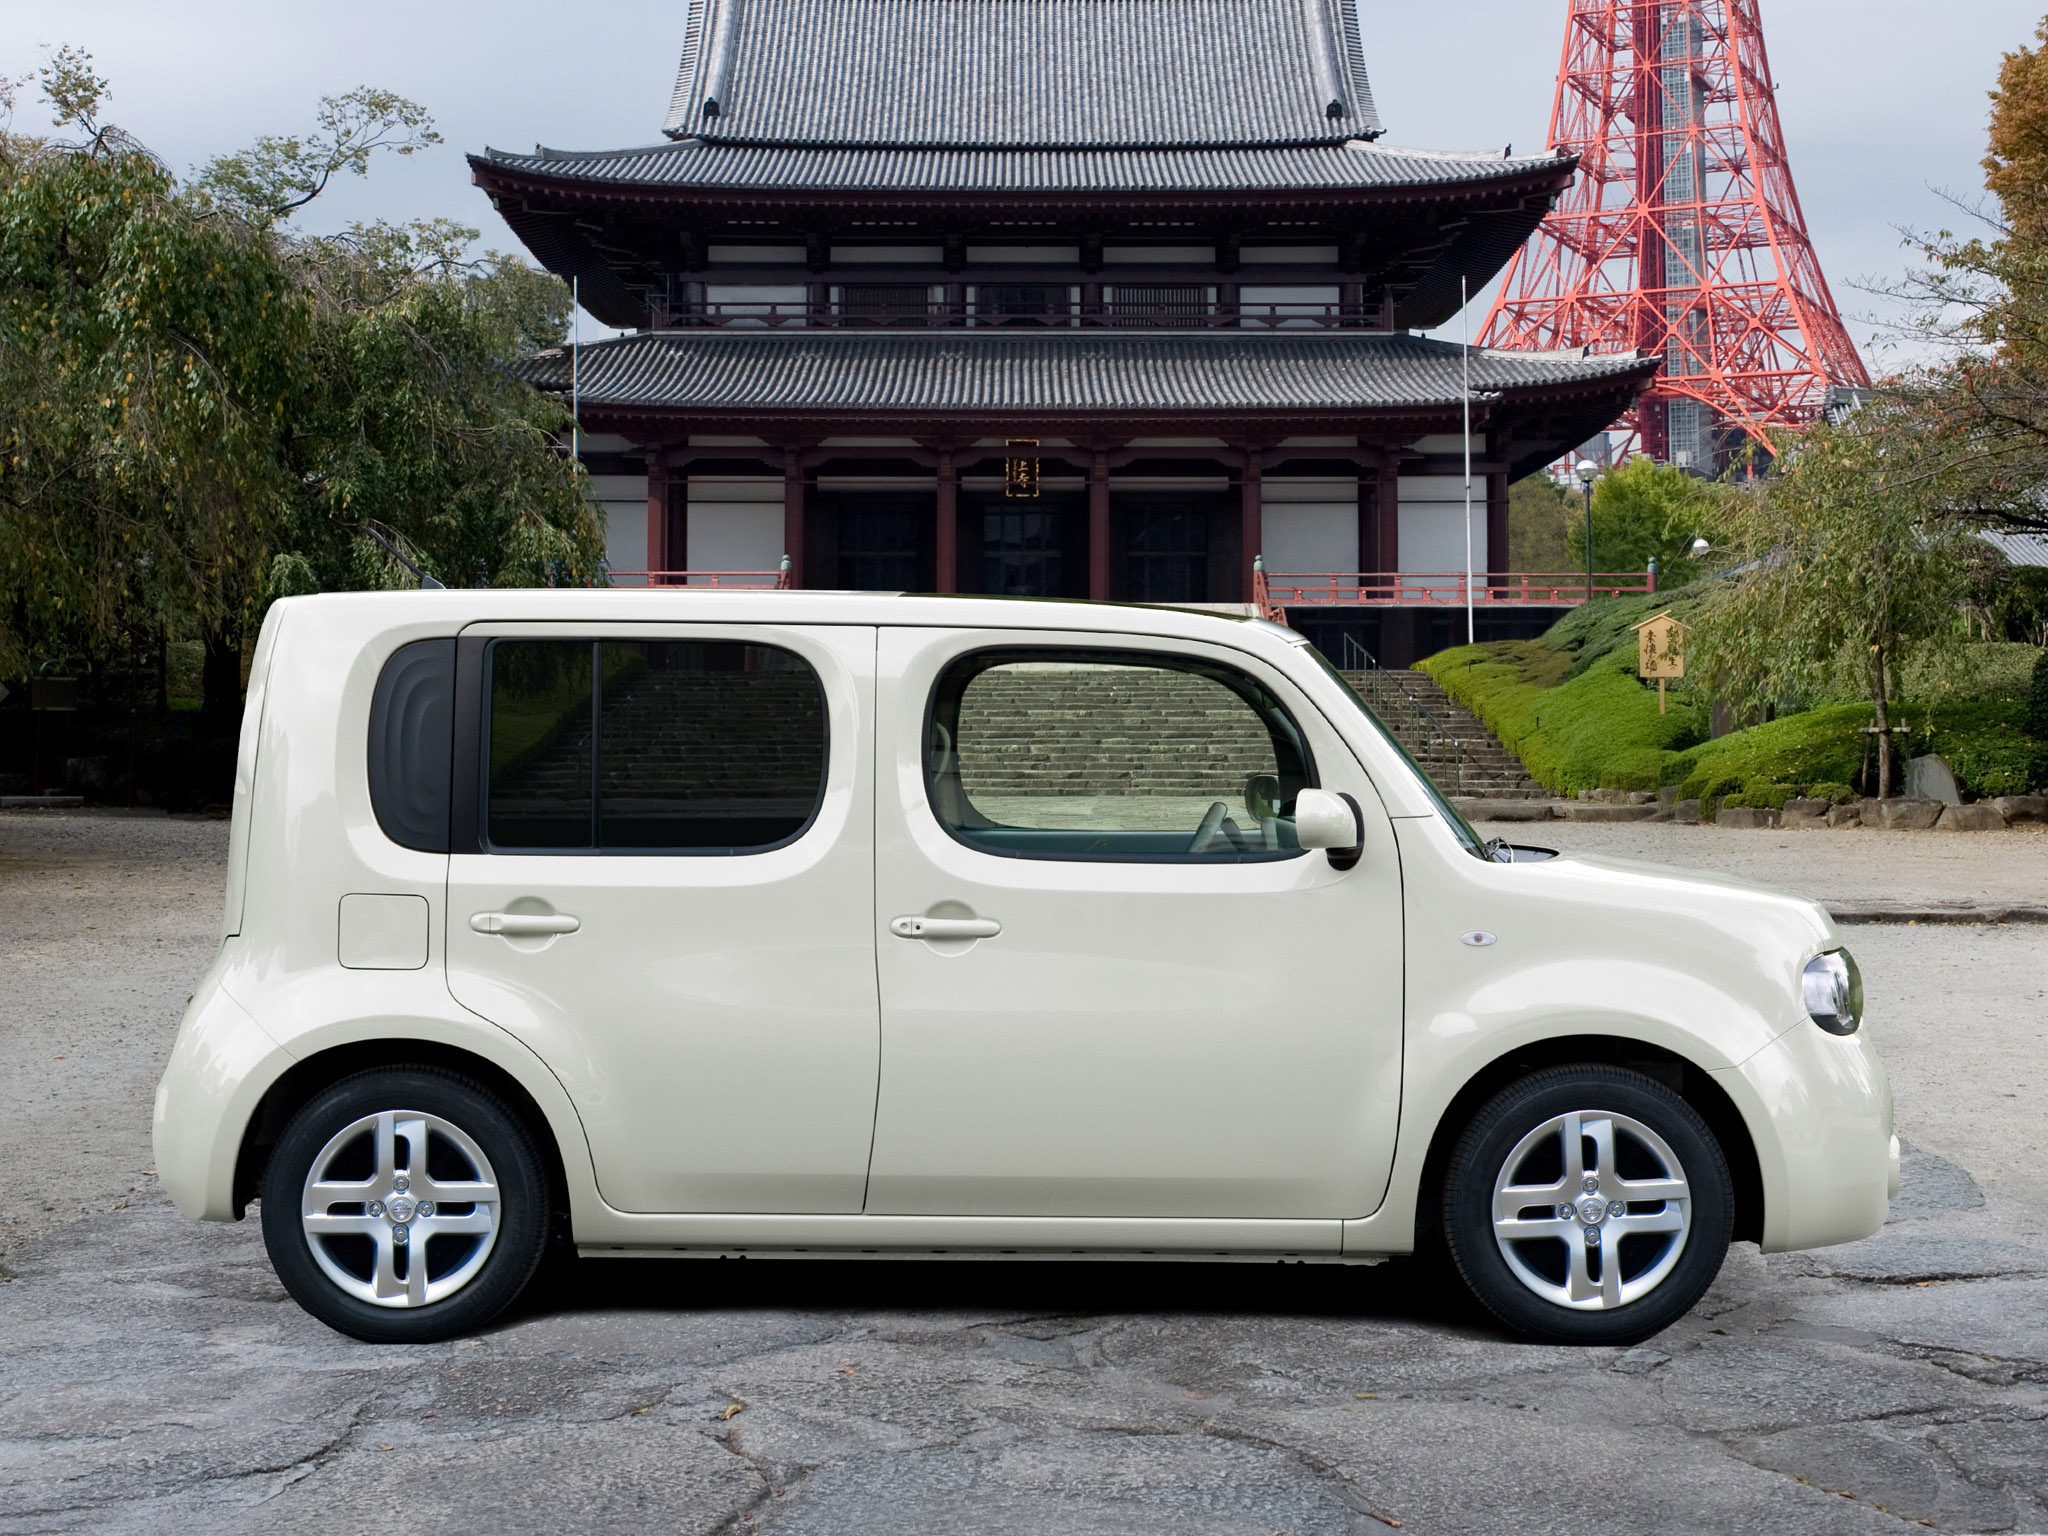 Nissan altima japanese version #2